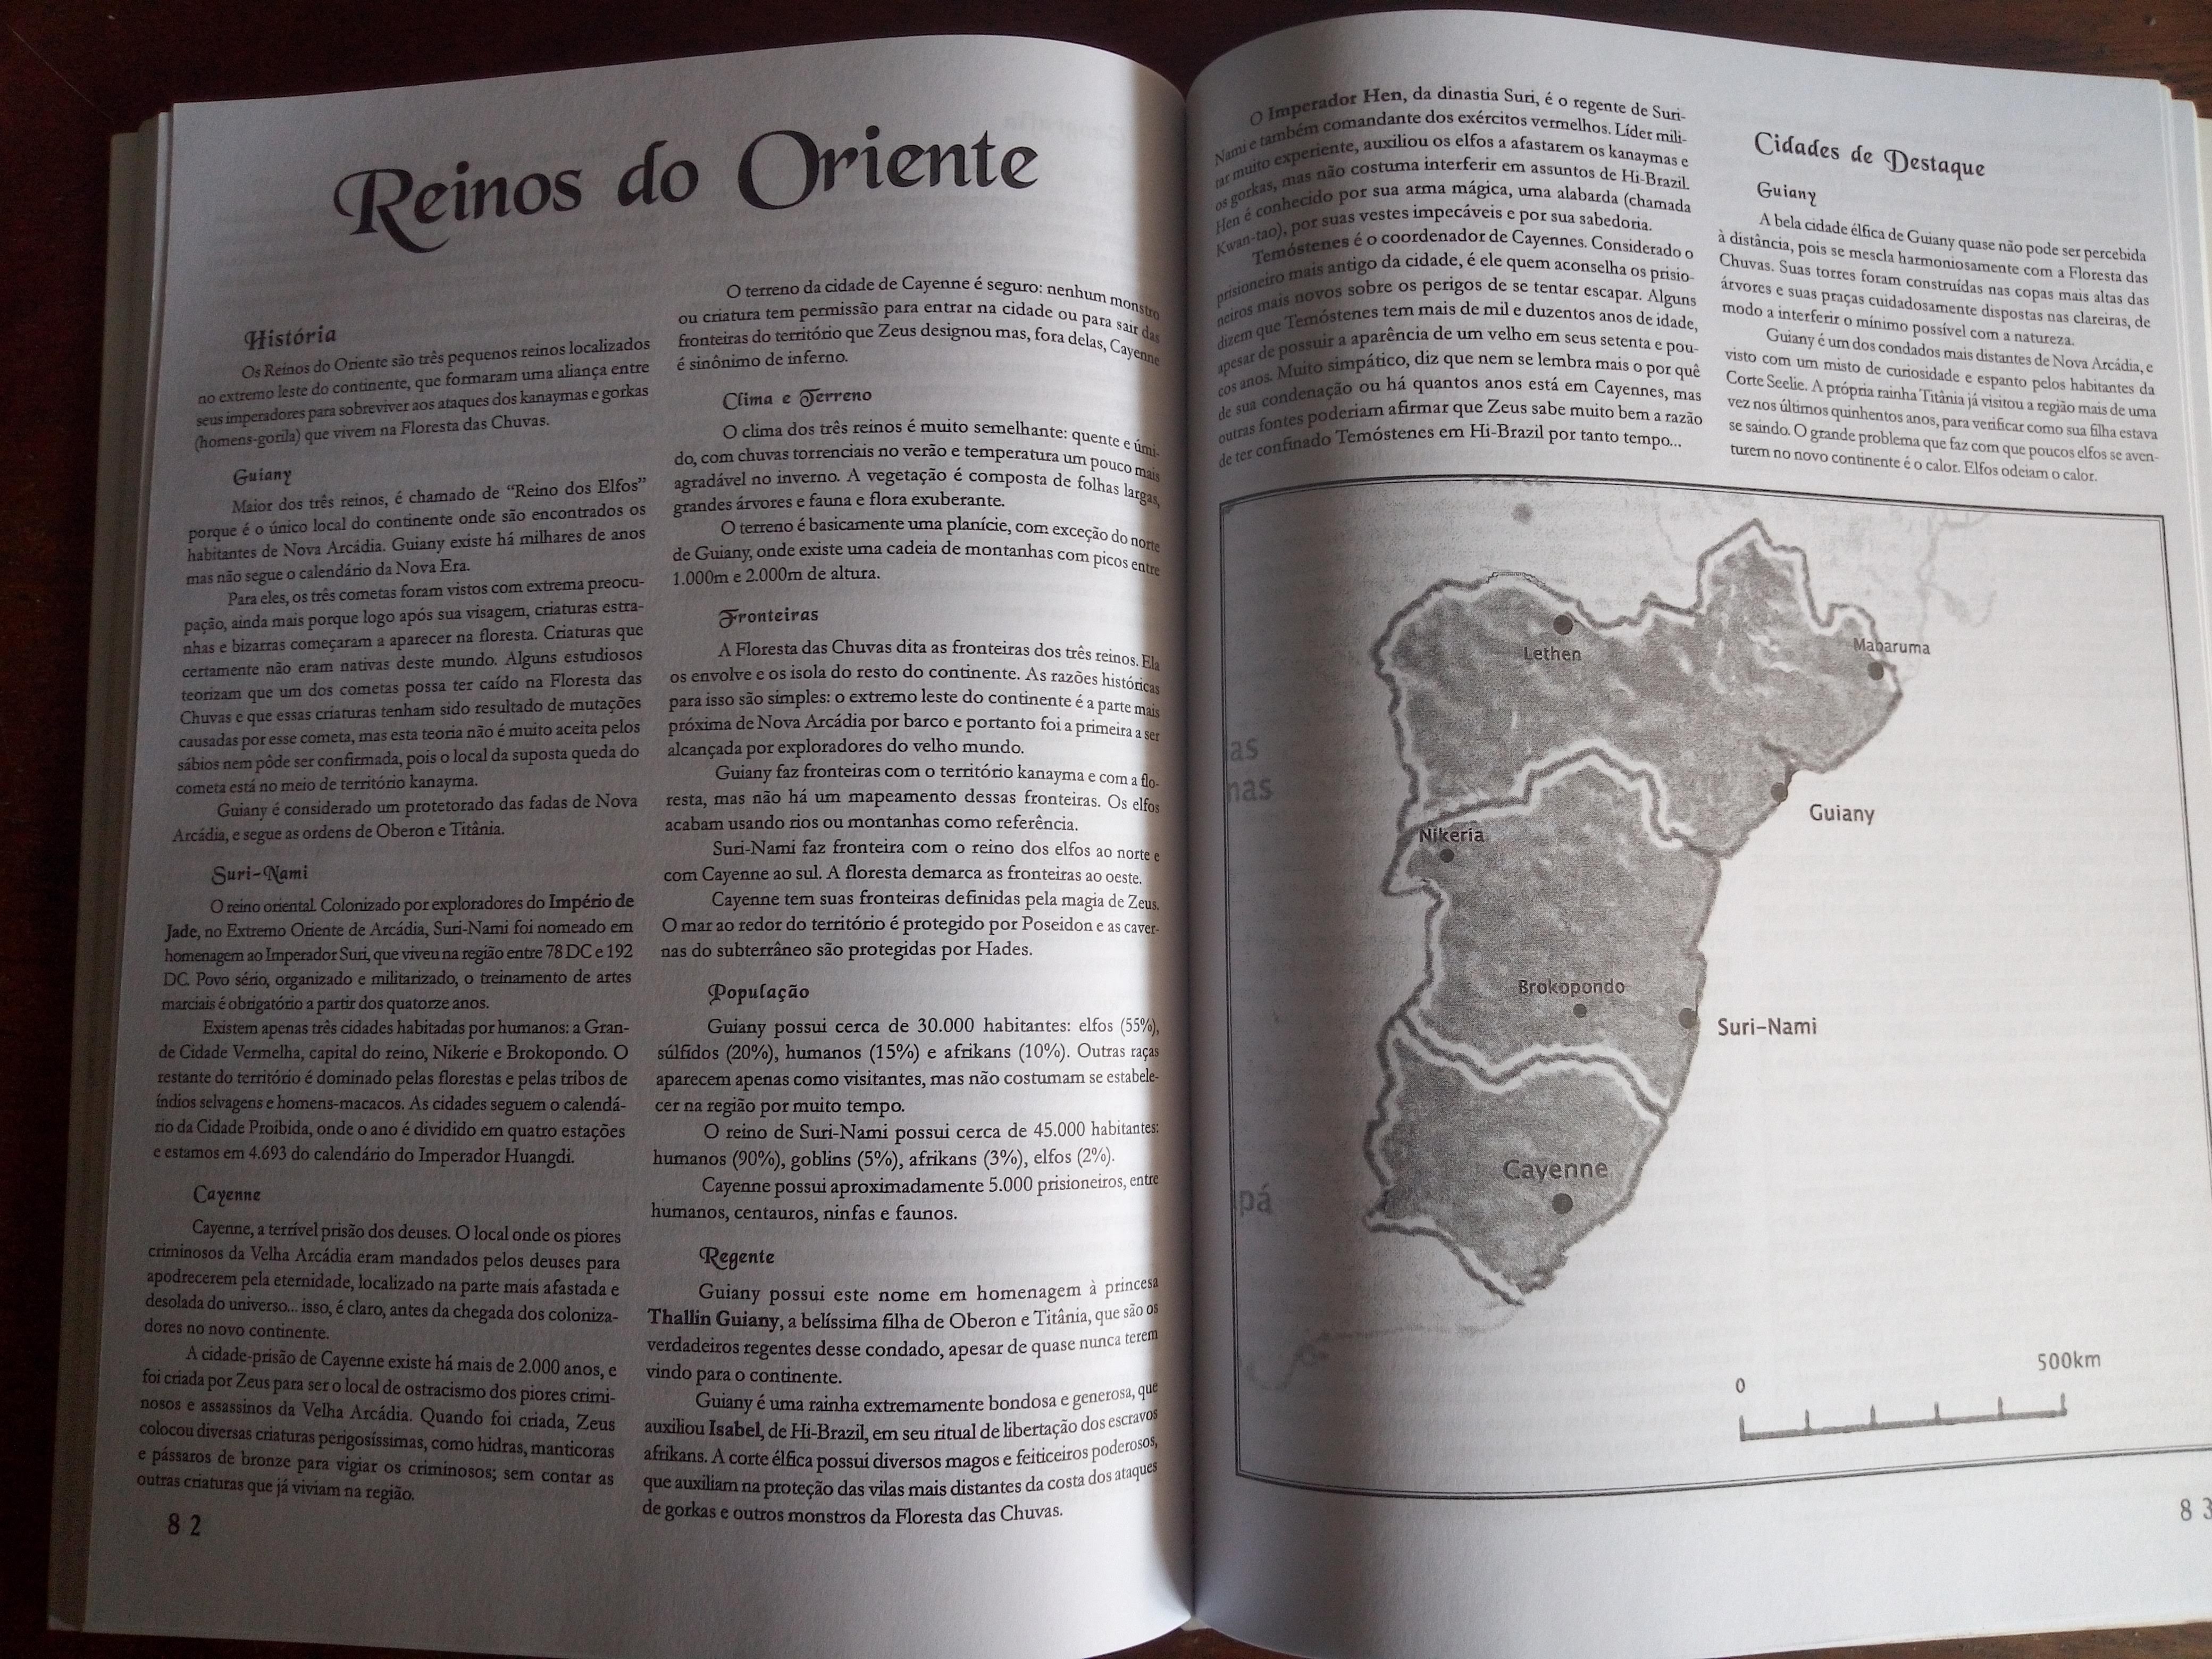 Hi-Brazil, o primeiro RPG focado no folclore brasileiro - Rei dos